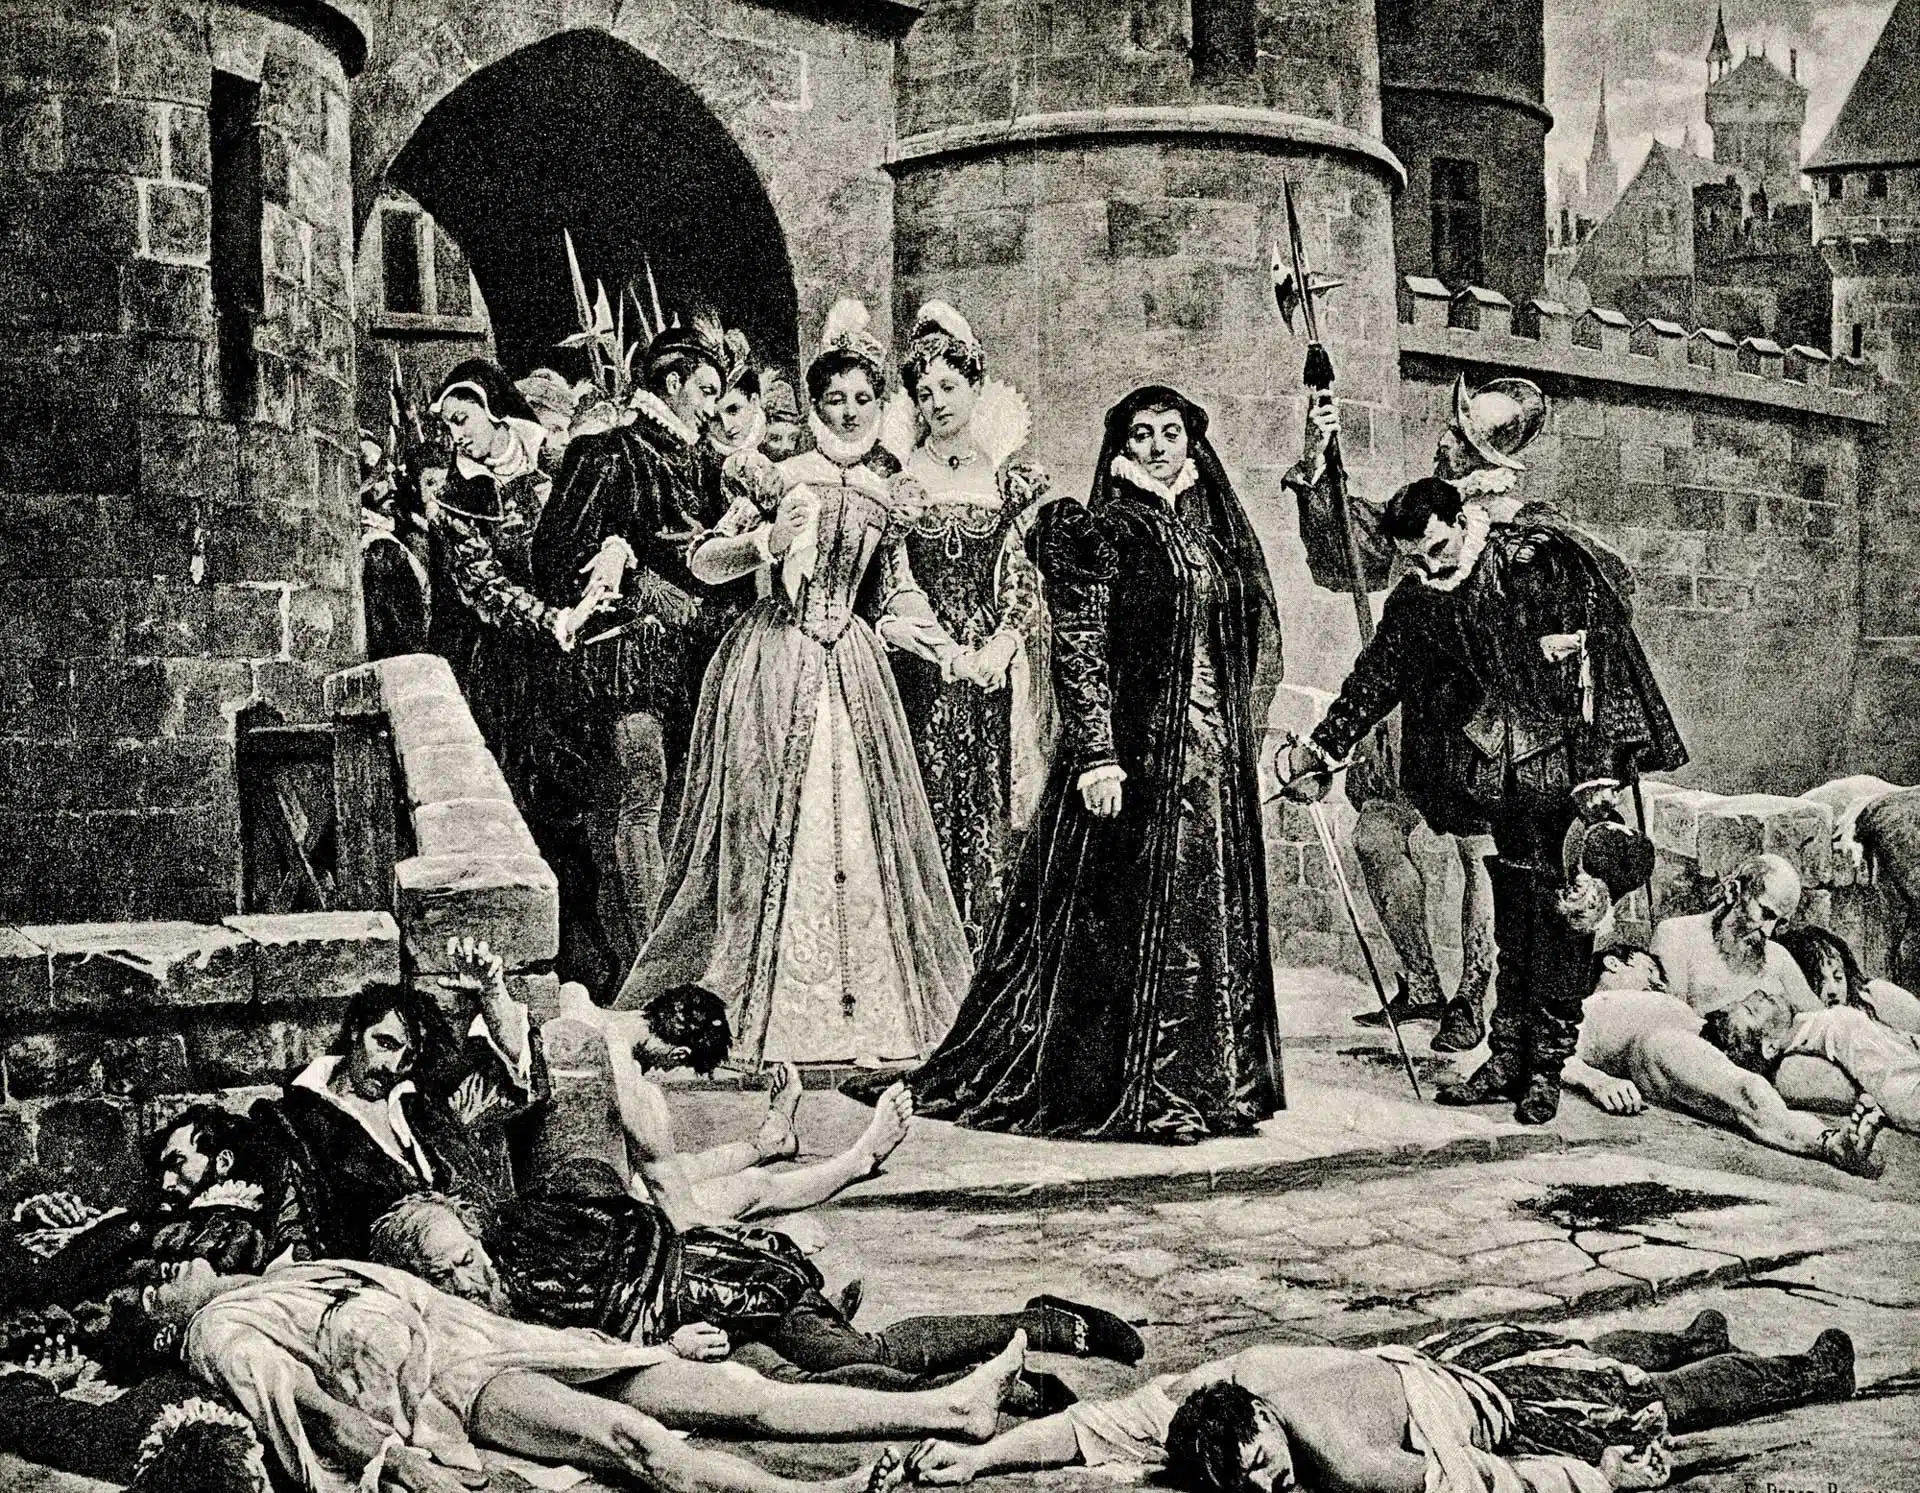 Massacre of the French Huguenots